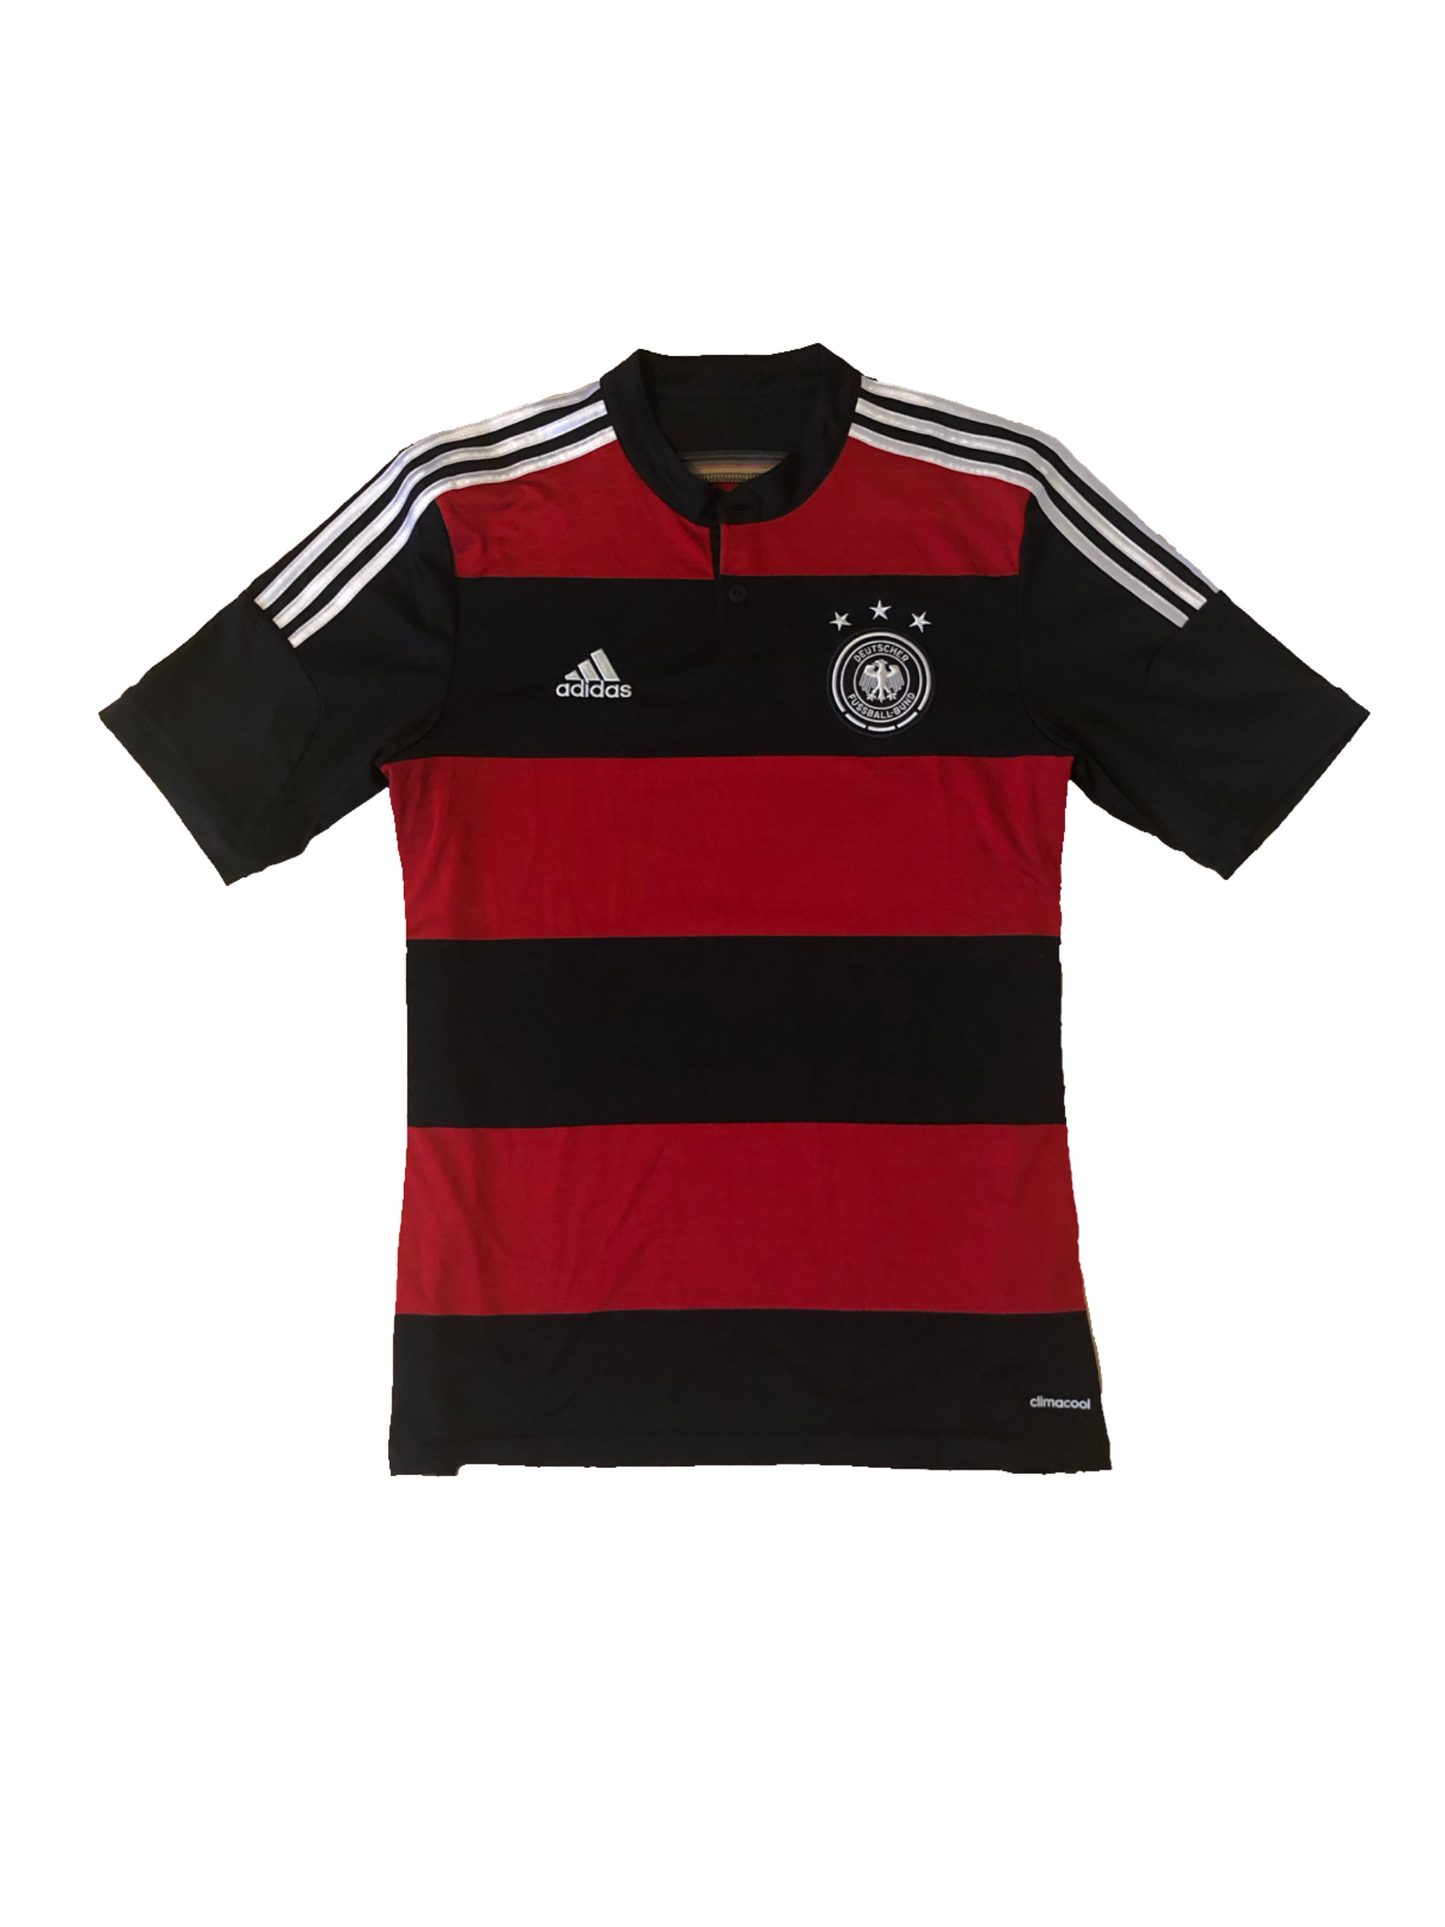 Germany 2014/15 Away Shirt